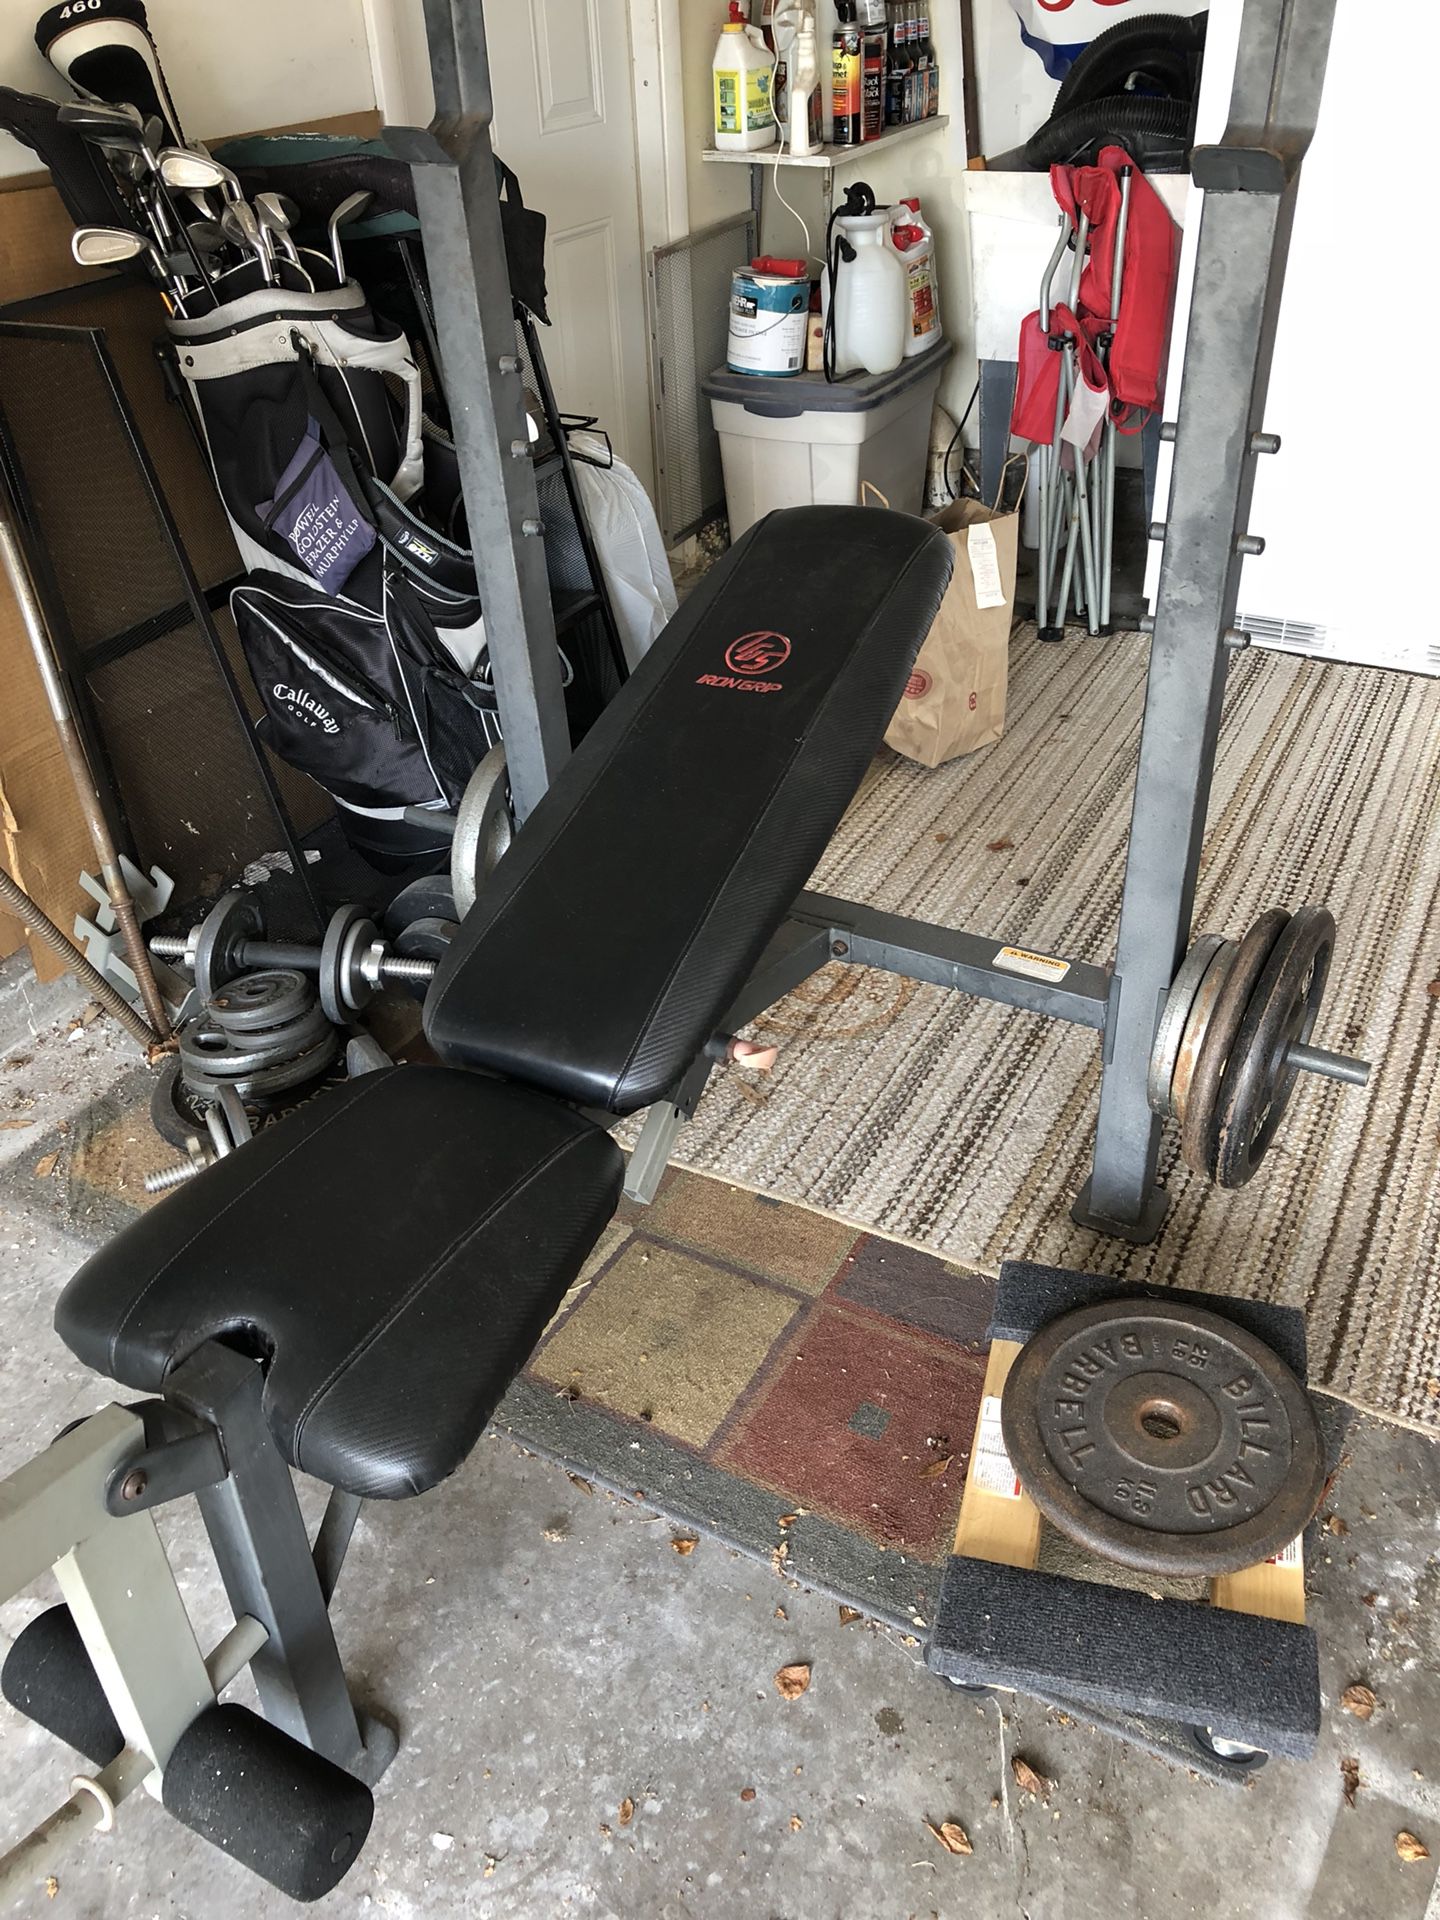 Irongrip full workout set (bench,bars,weights)